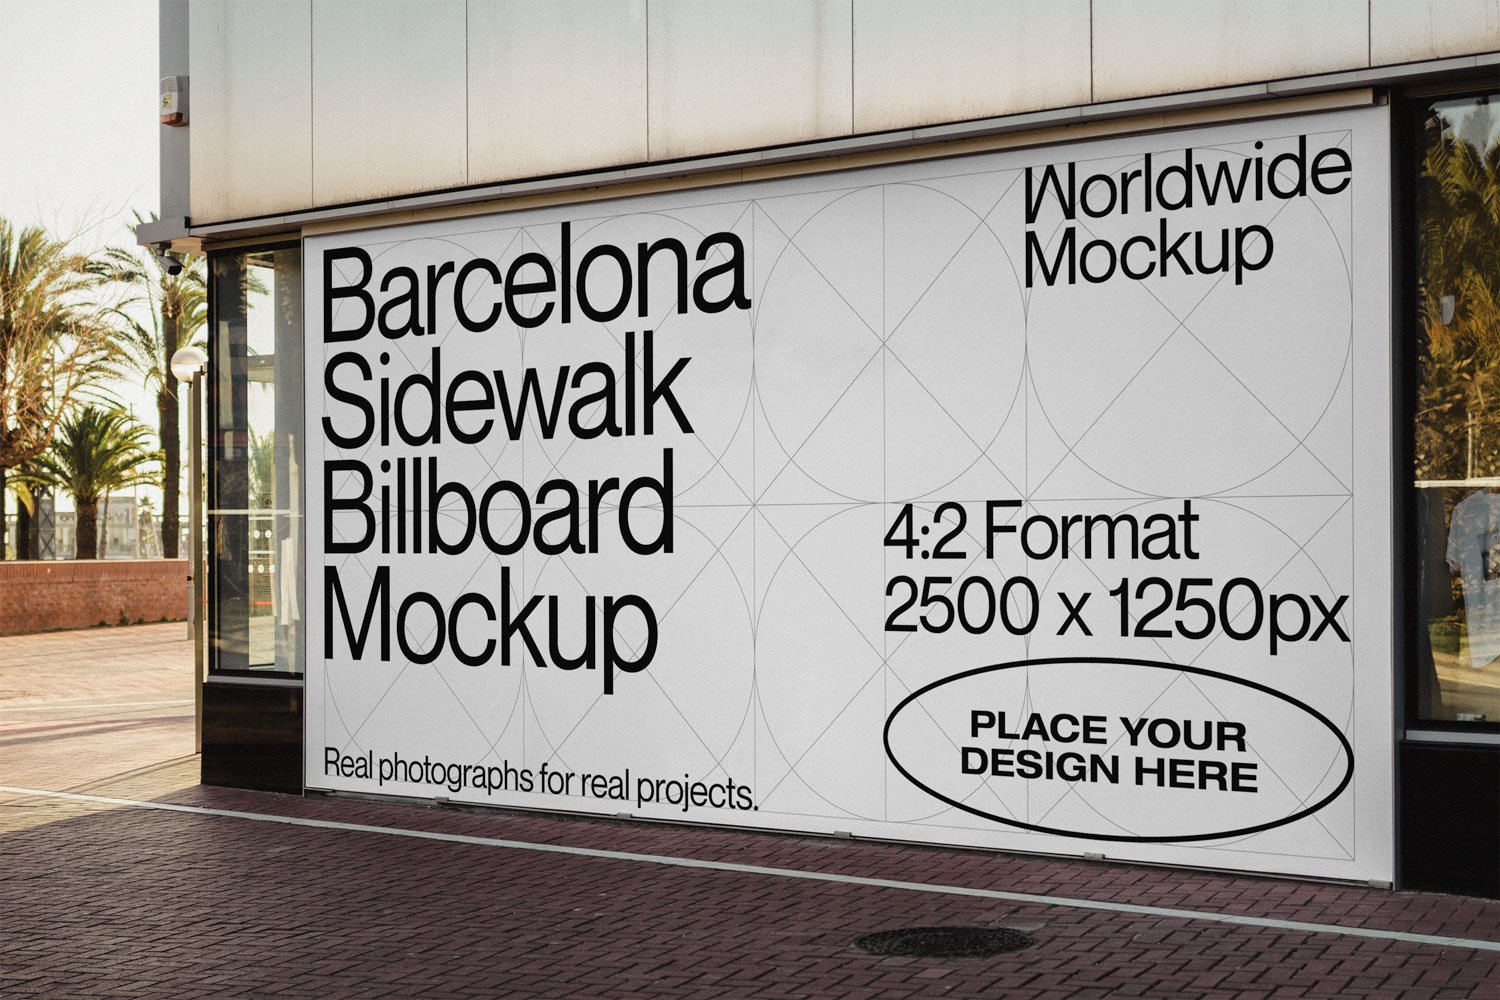 Barcelona Billboard Mockup preview image.